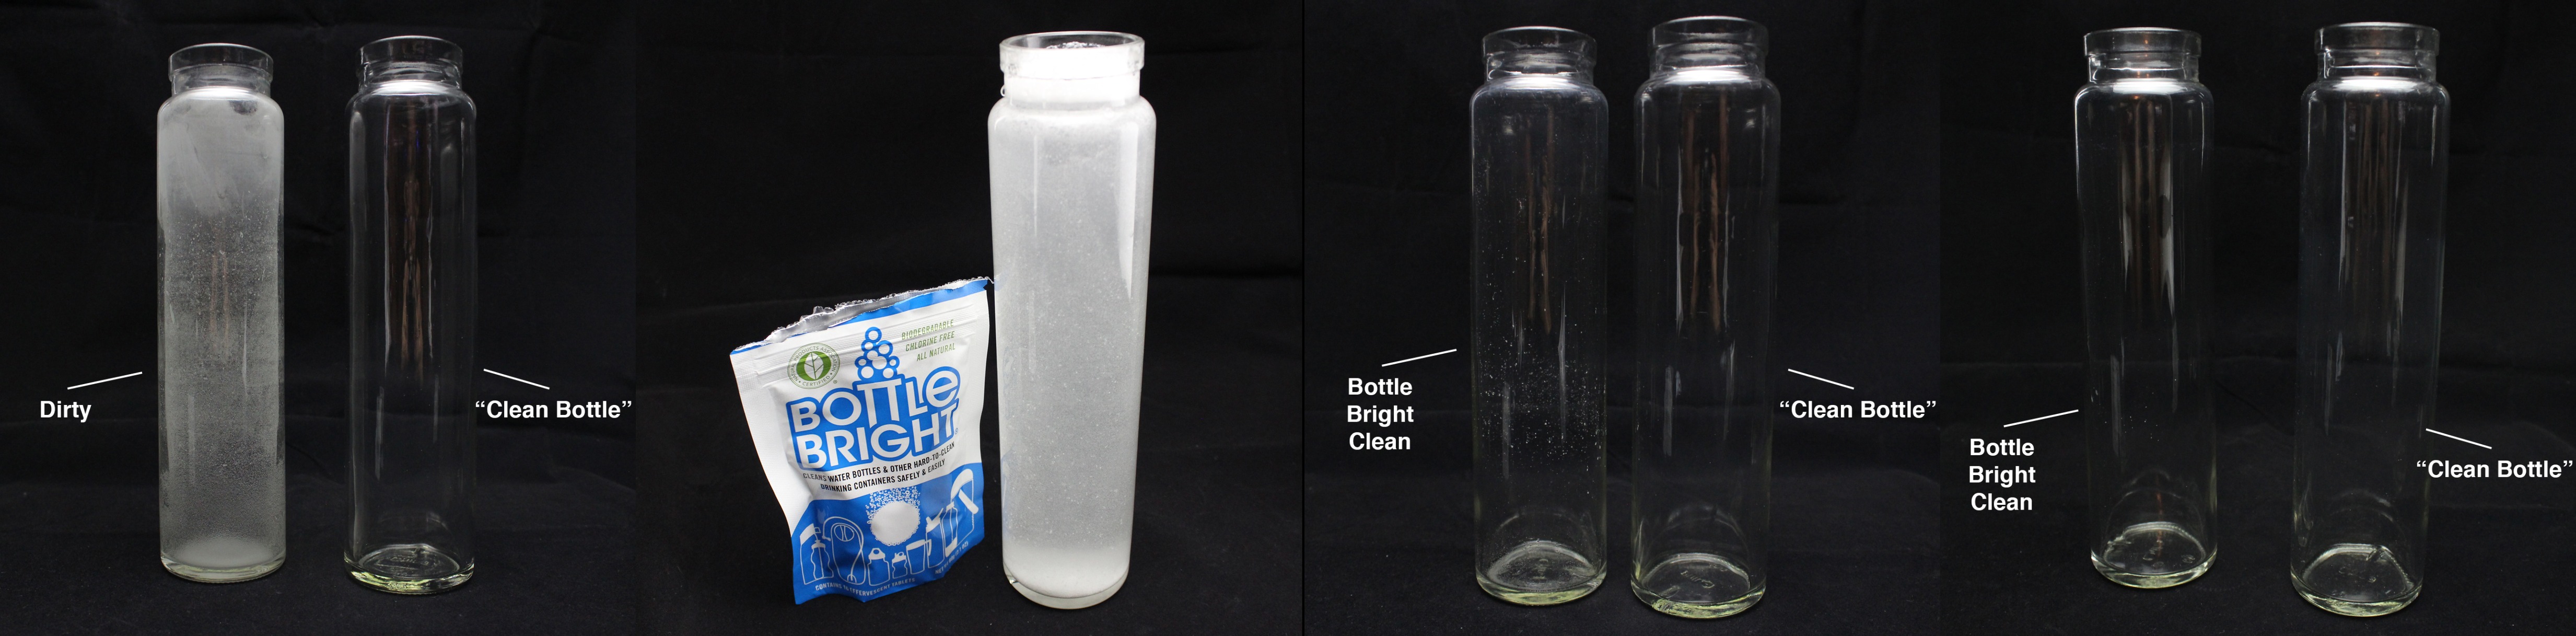 http://blog.glassticwaterbottle.com/wp-content/uploads/2015/09/Glasstic_Bottle_Bright.jpg